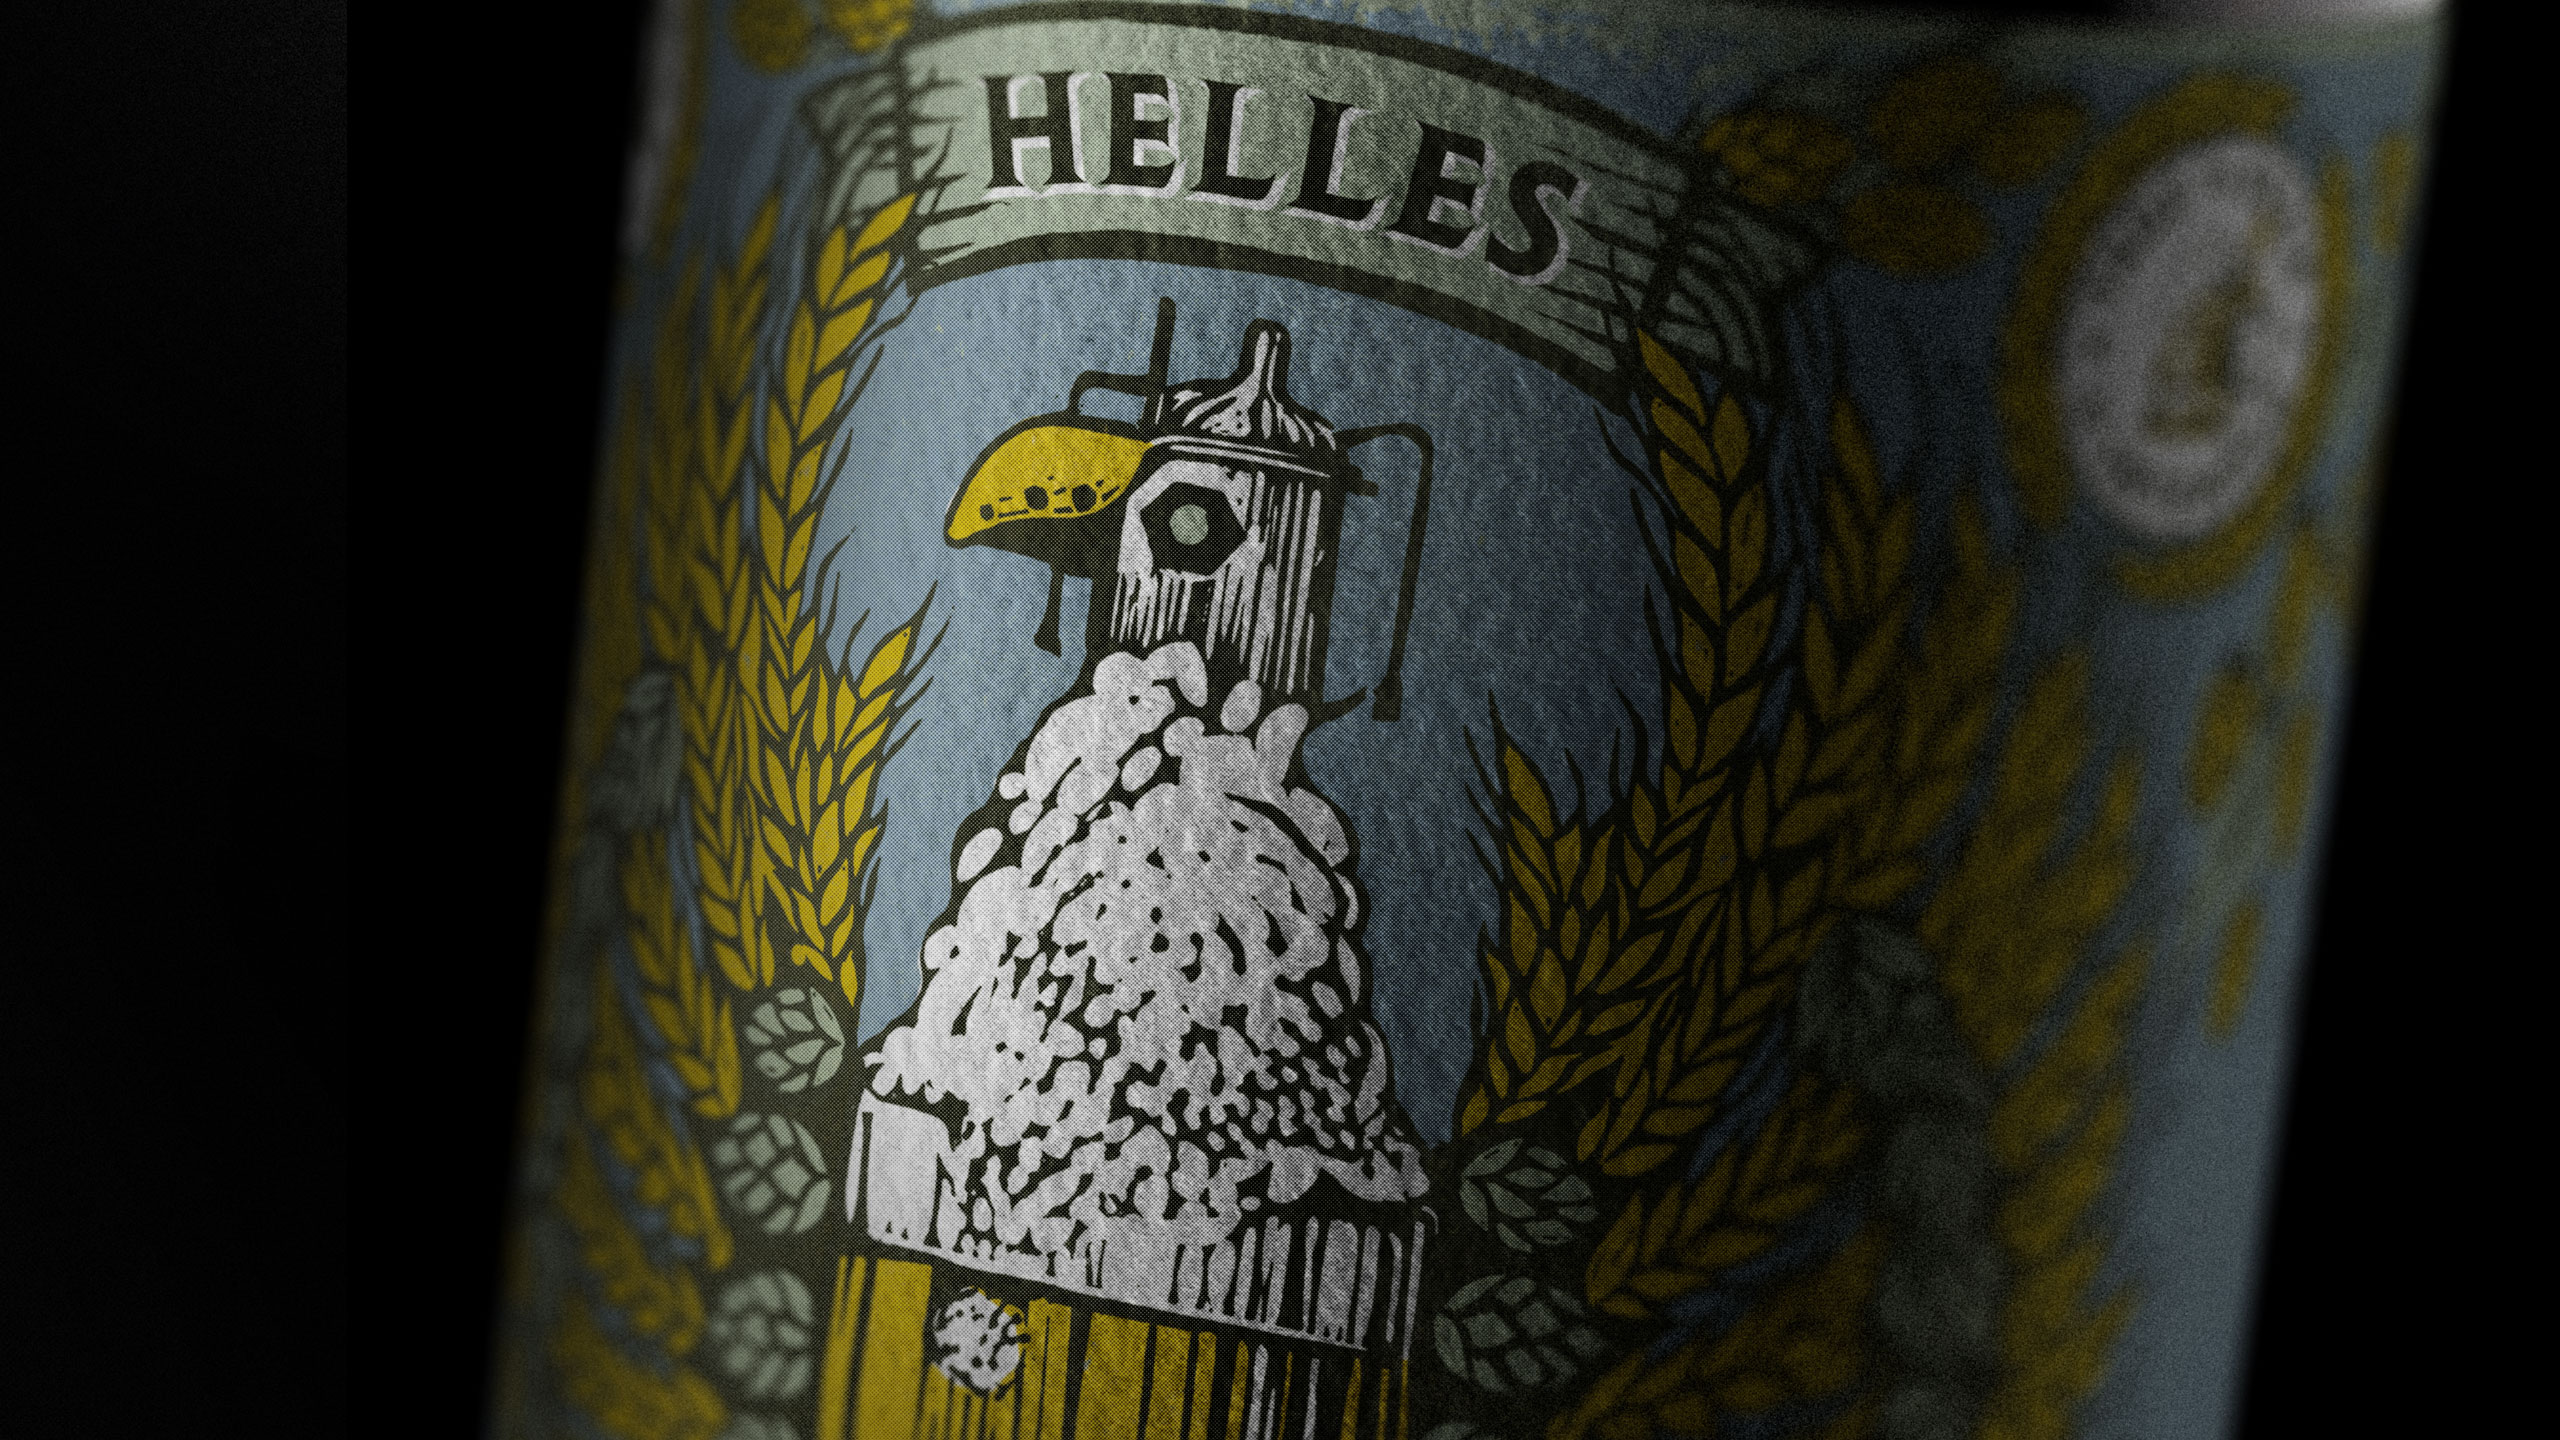 Tried-and-True-Design-Auckland-Zeelandt-rebrand-beer-bottle-Helles